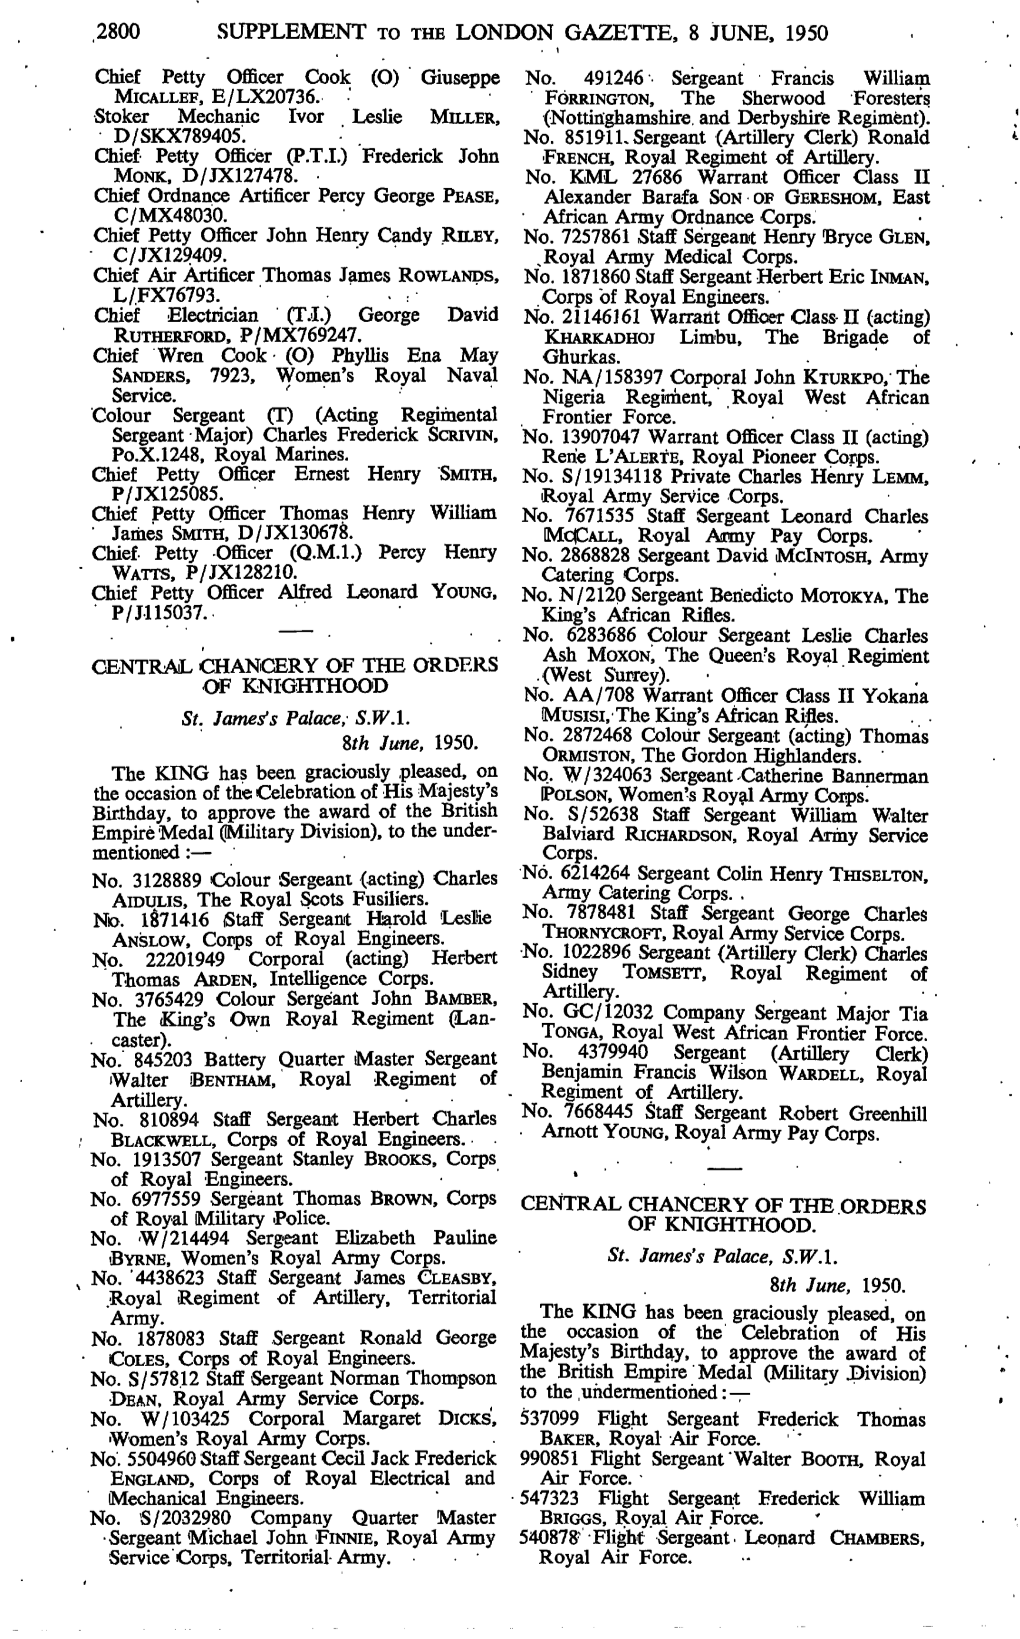 2800 Supplement to the London Gazette, 8 June, 1950